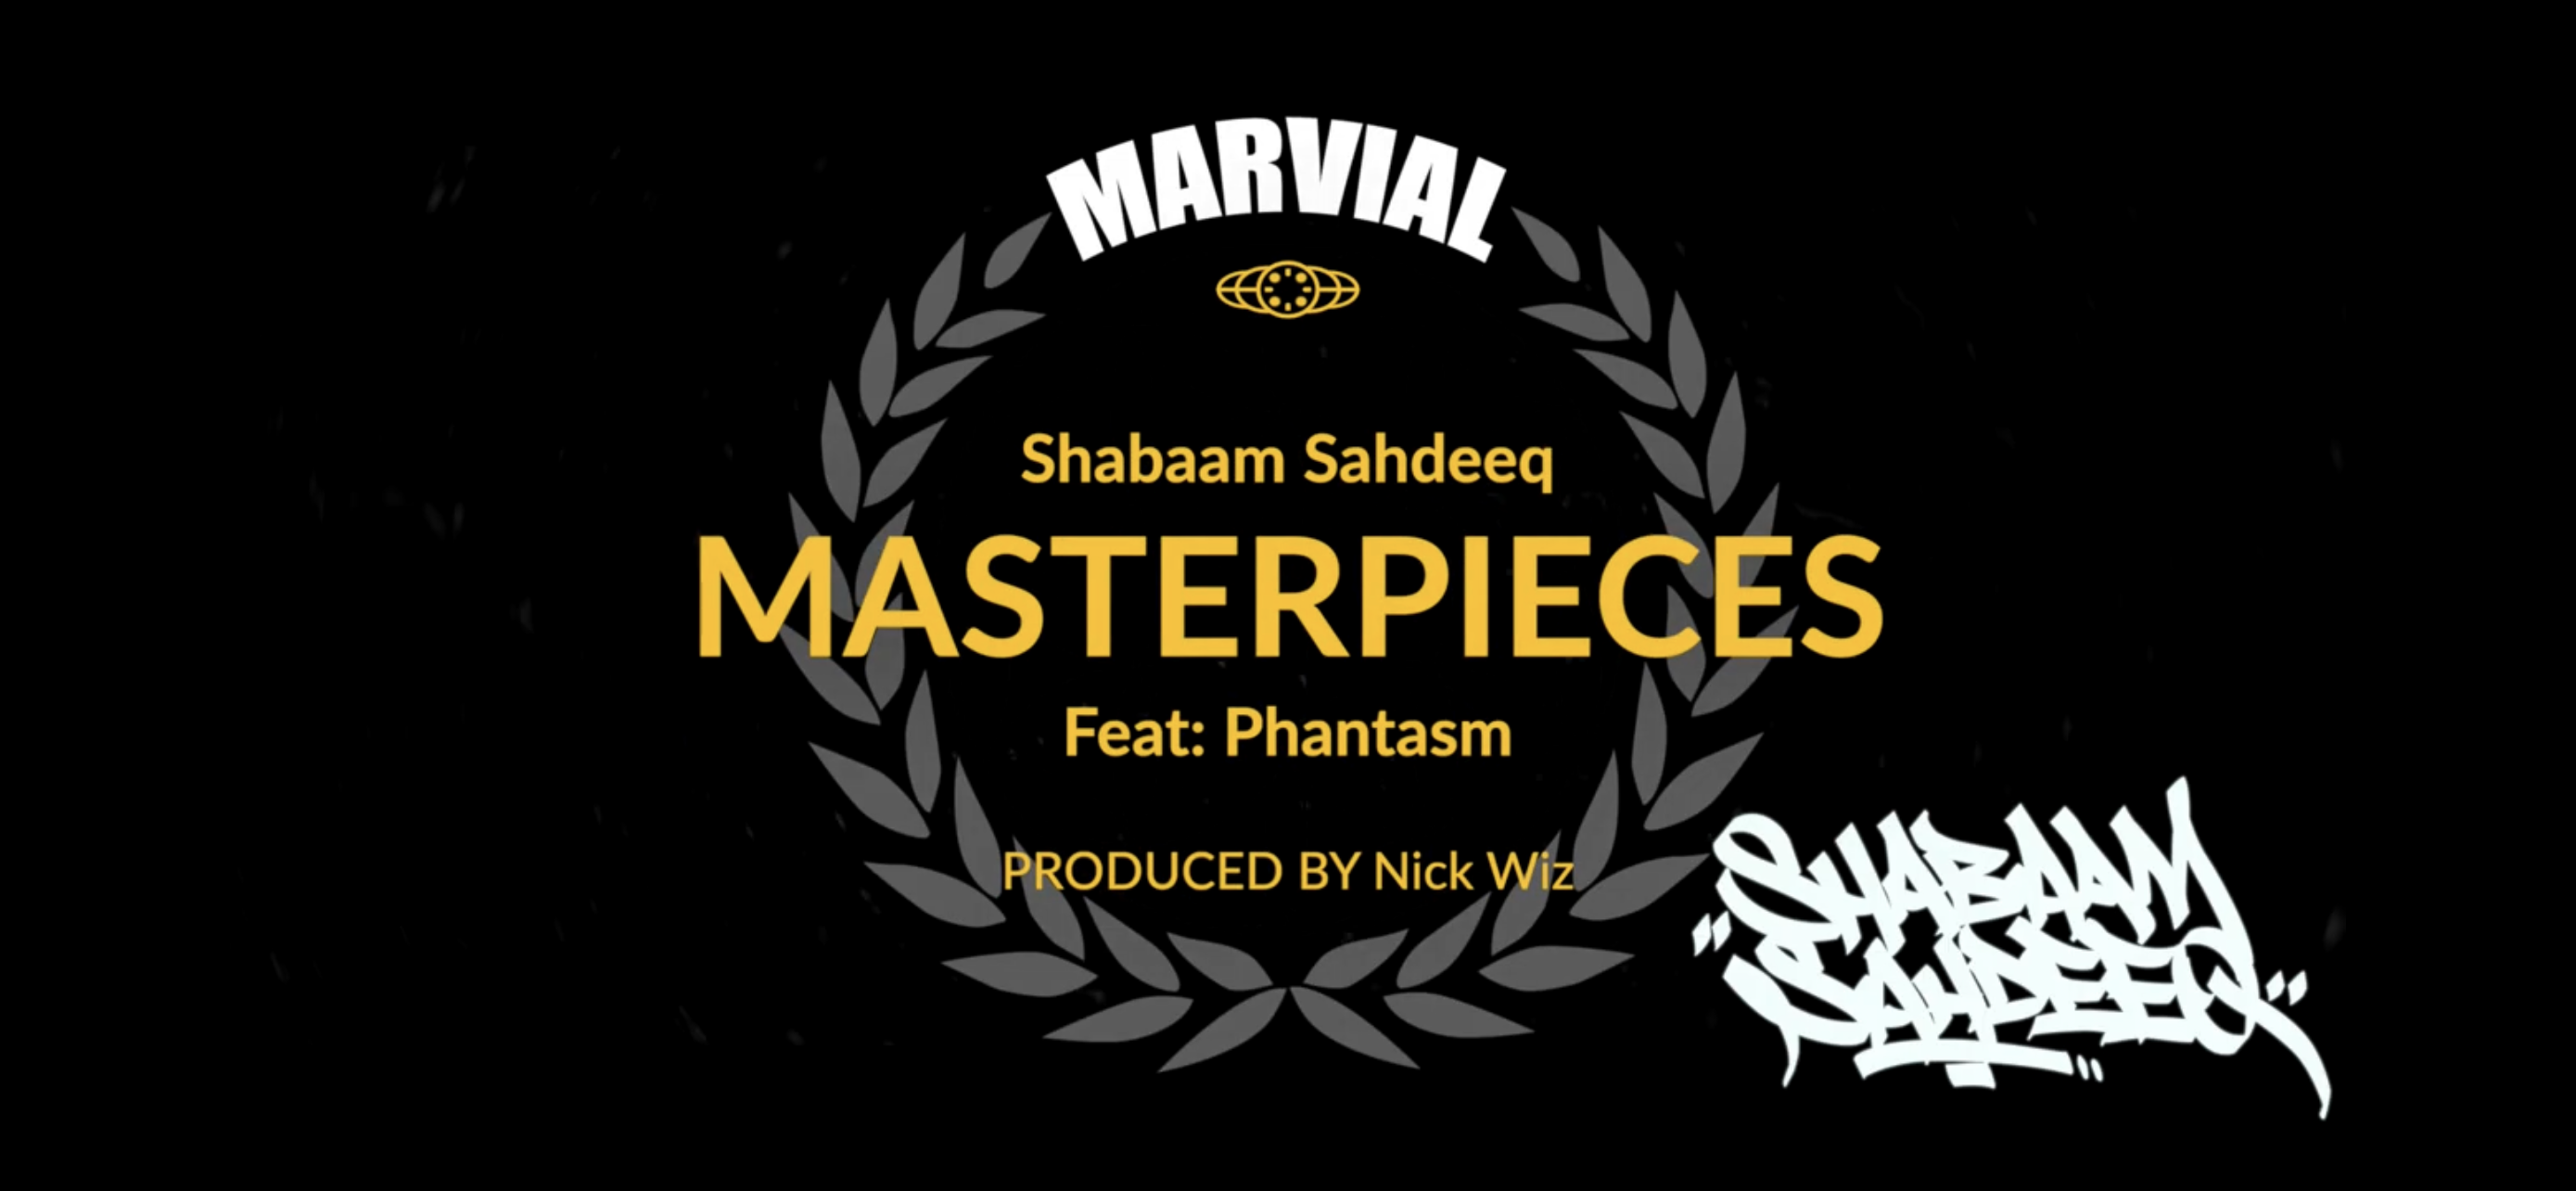 Shabaam Sahdeeq & Nick Wiz "Masterpieces" feat Phantasm (of Cella Dwellas) [video]